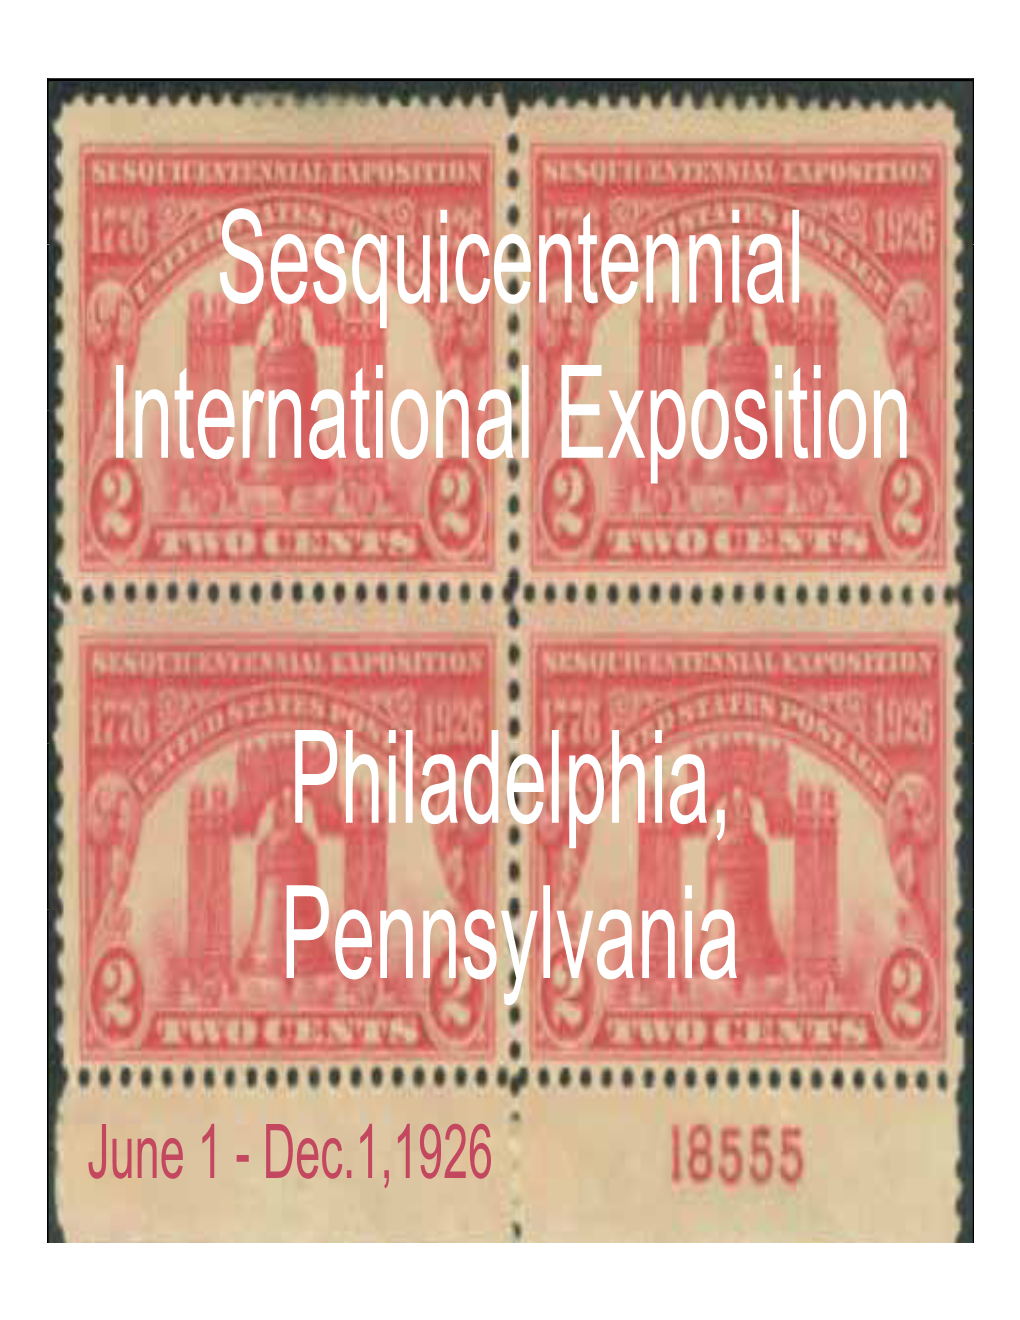 Sesquicentennial International Exposition Phil D L Hi Adelphia